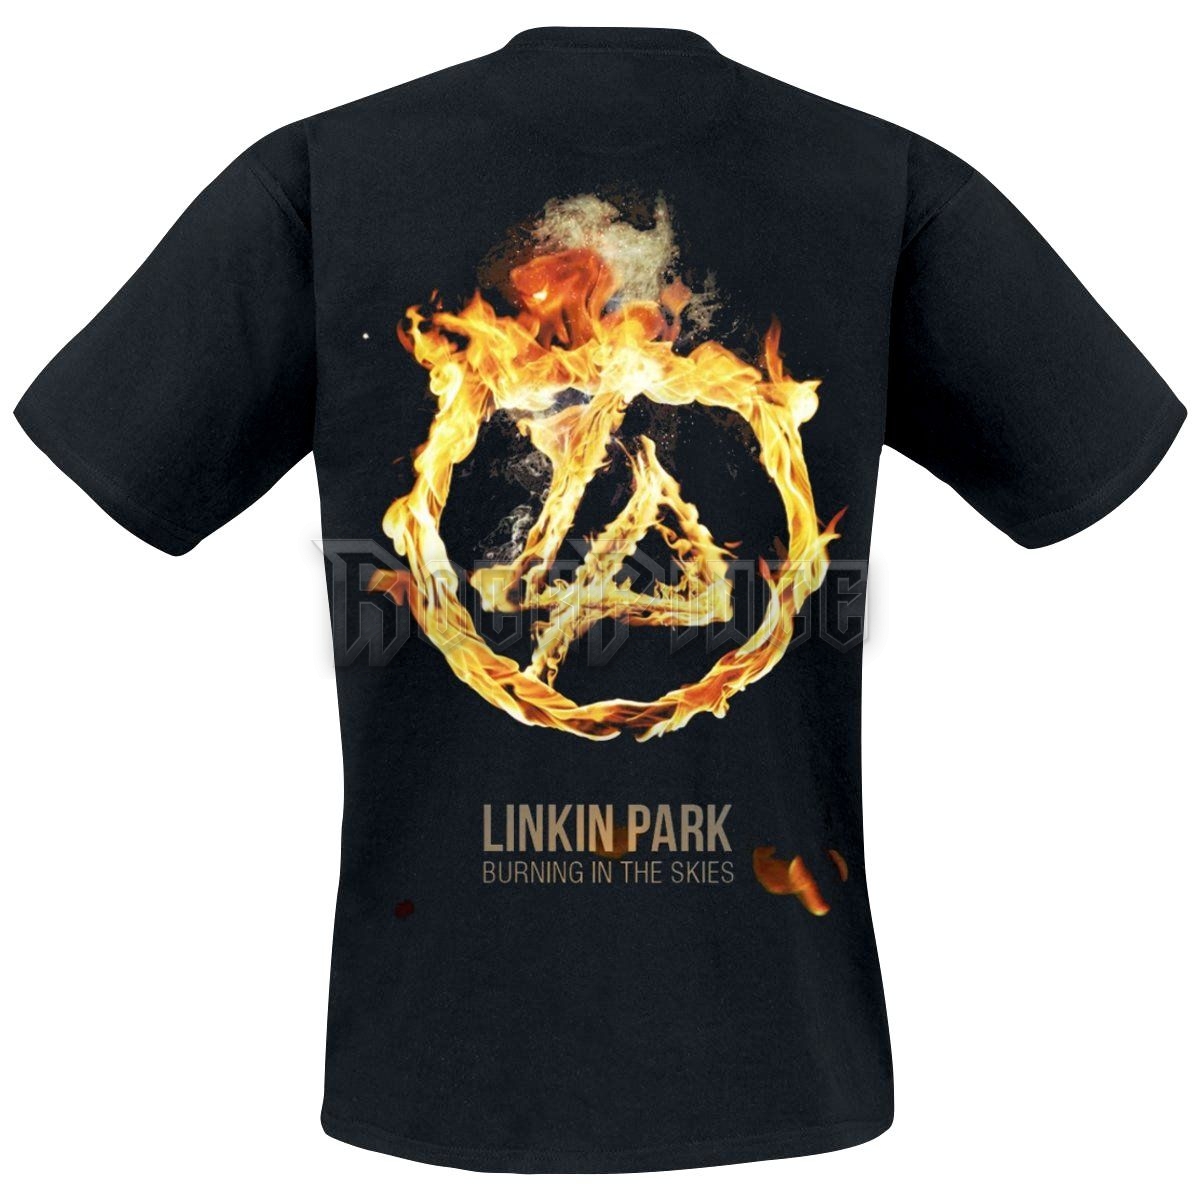 Linkin Park - Burning In The Skies - UNISEX PÓLÓ